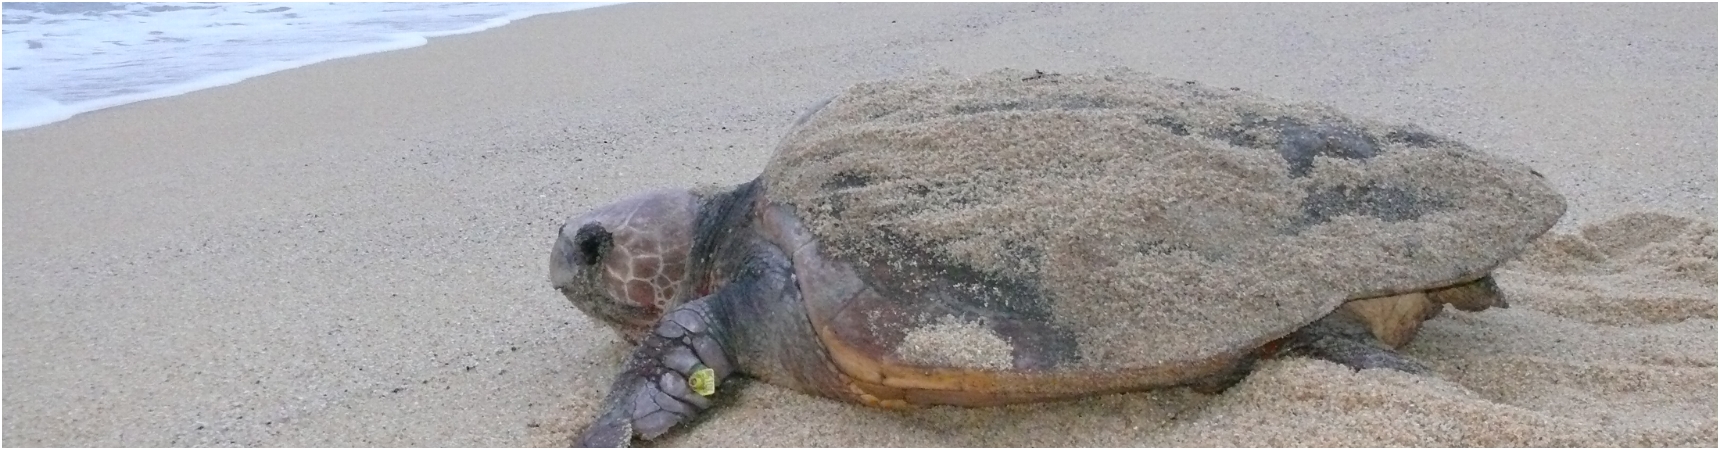 photograph of a sea turtle